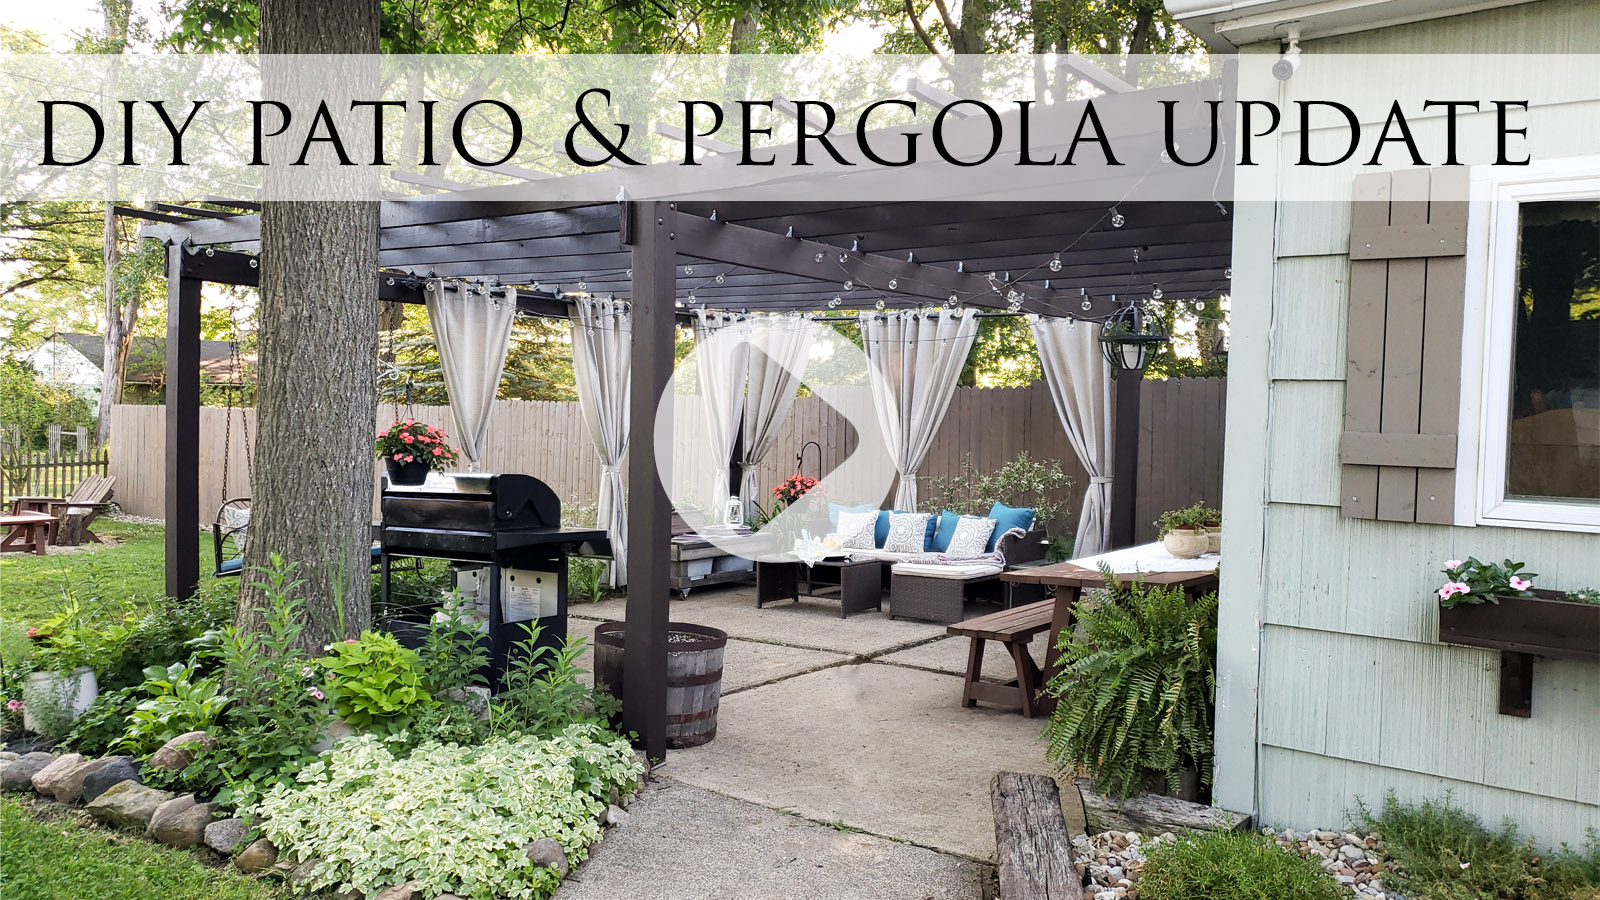 DIY Patio & Pergola Update with Video Tour by Larissa of Prodigal Pieces | prodigalpieces.com